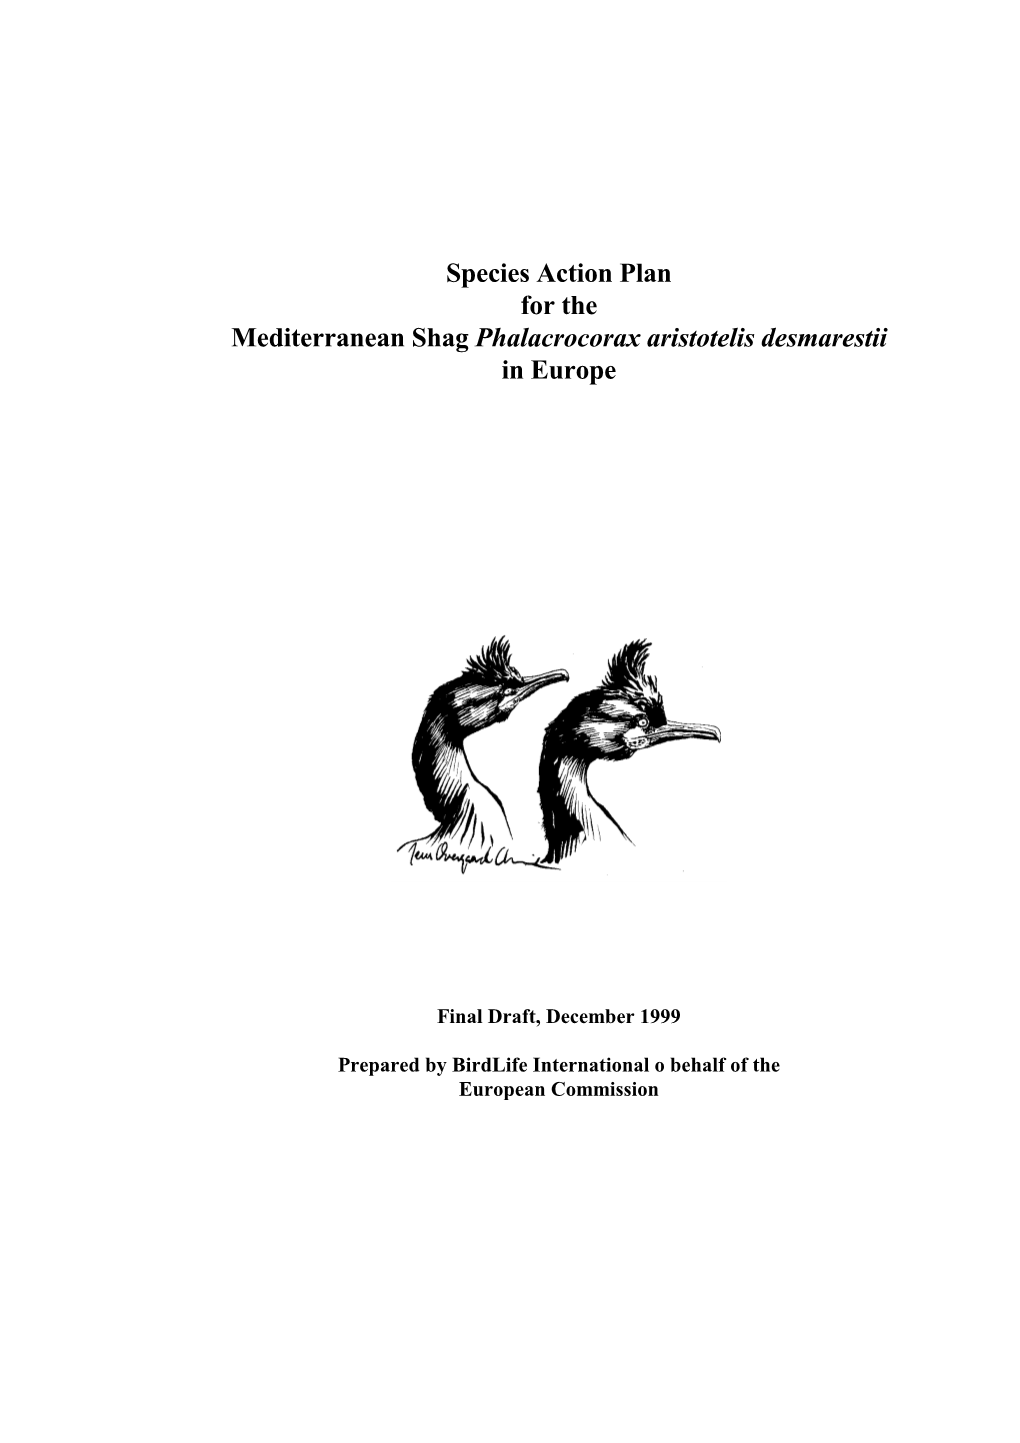 Species Action Plan for the Mediterranean Shag Phalacrocorax Aristotelis Desmarestii in Europe